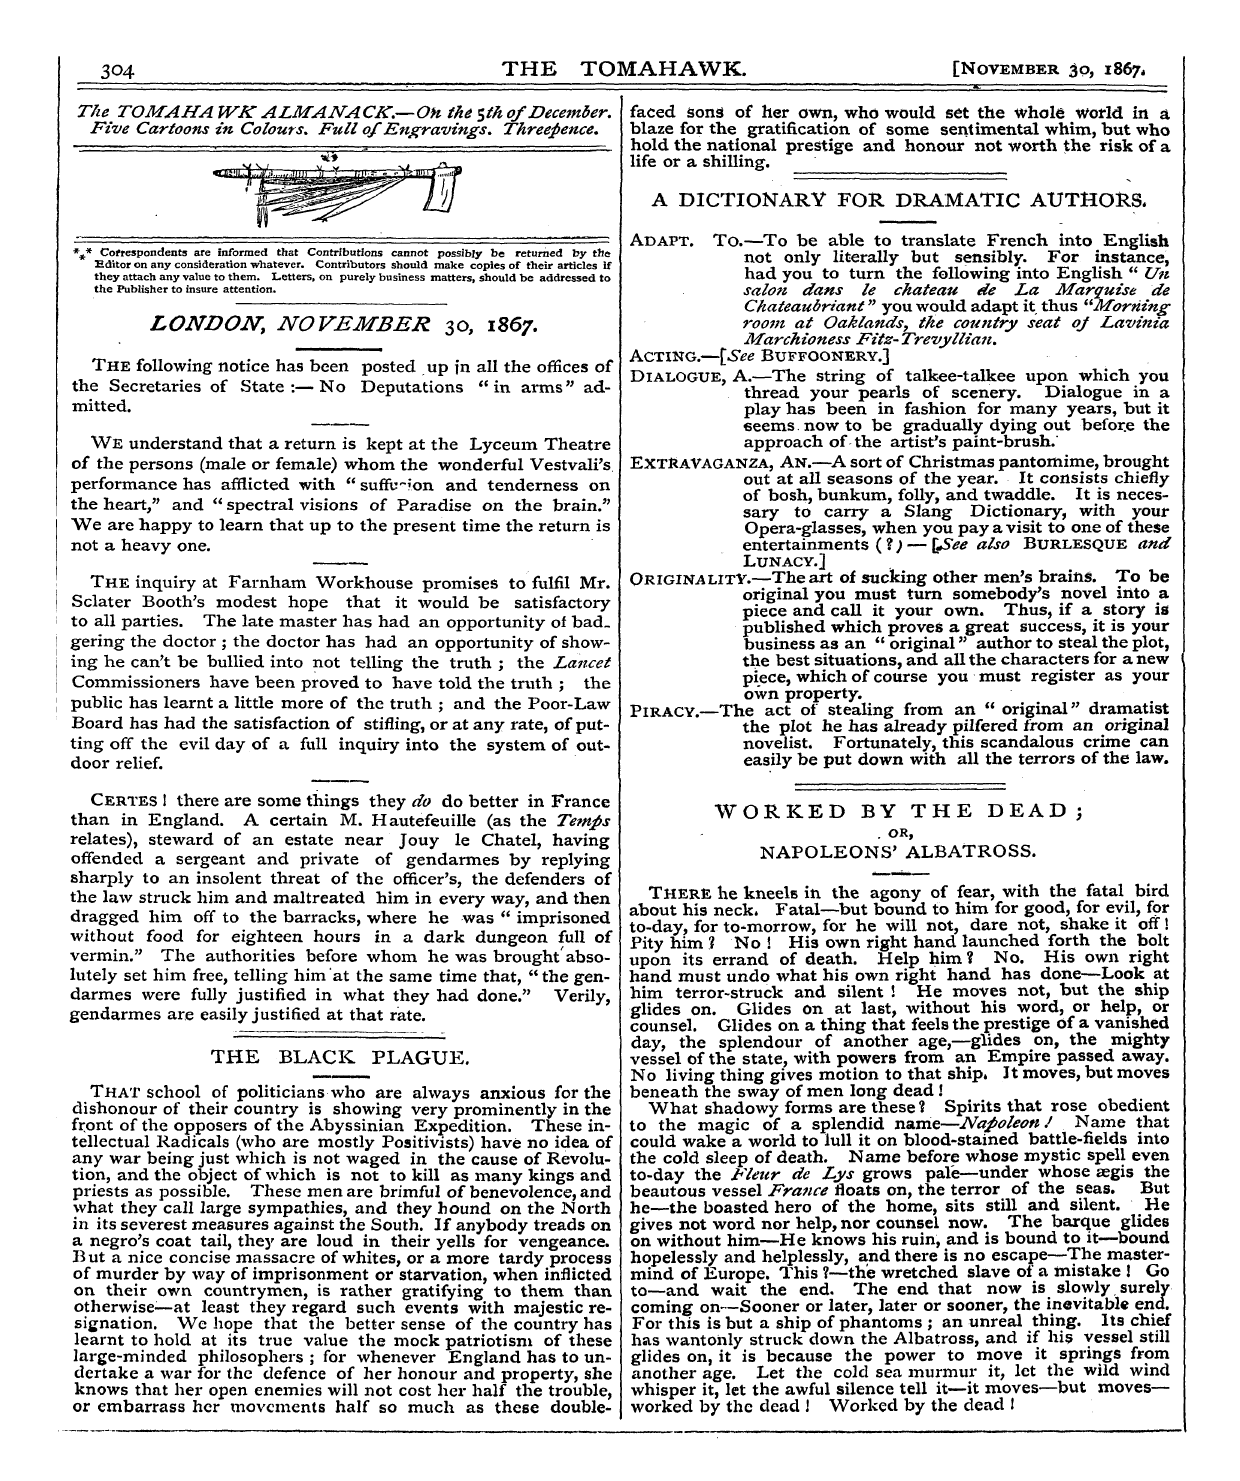 Tomahawk (1867-1870): jS F Y, 1st edition - London, November 30, 1867.